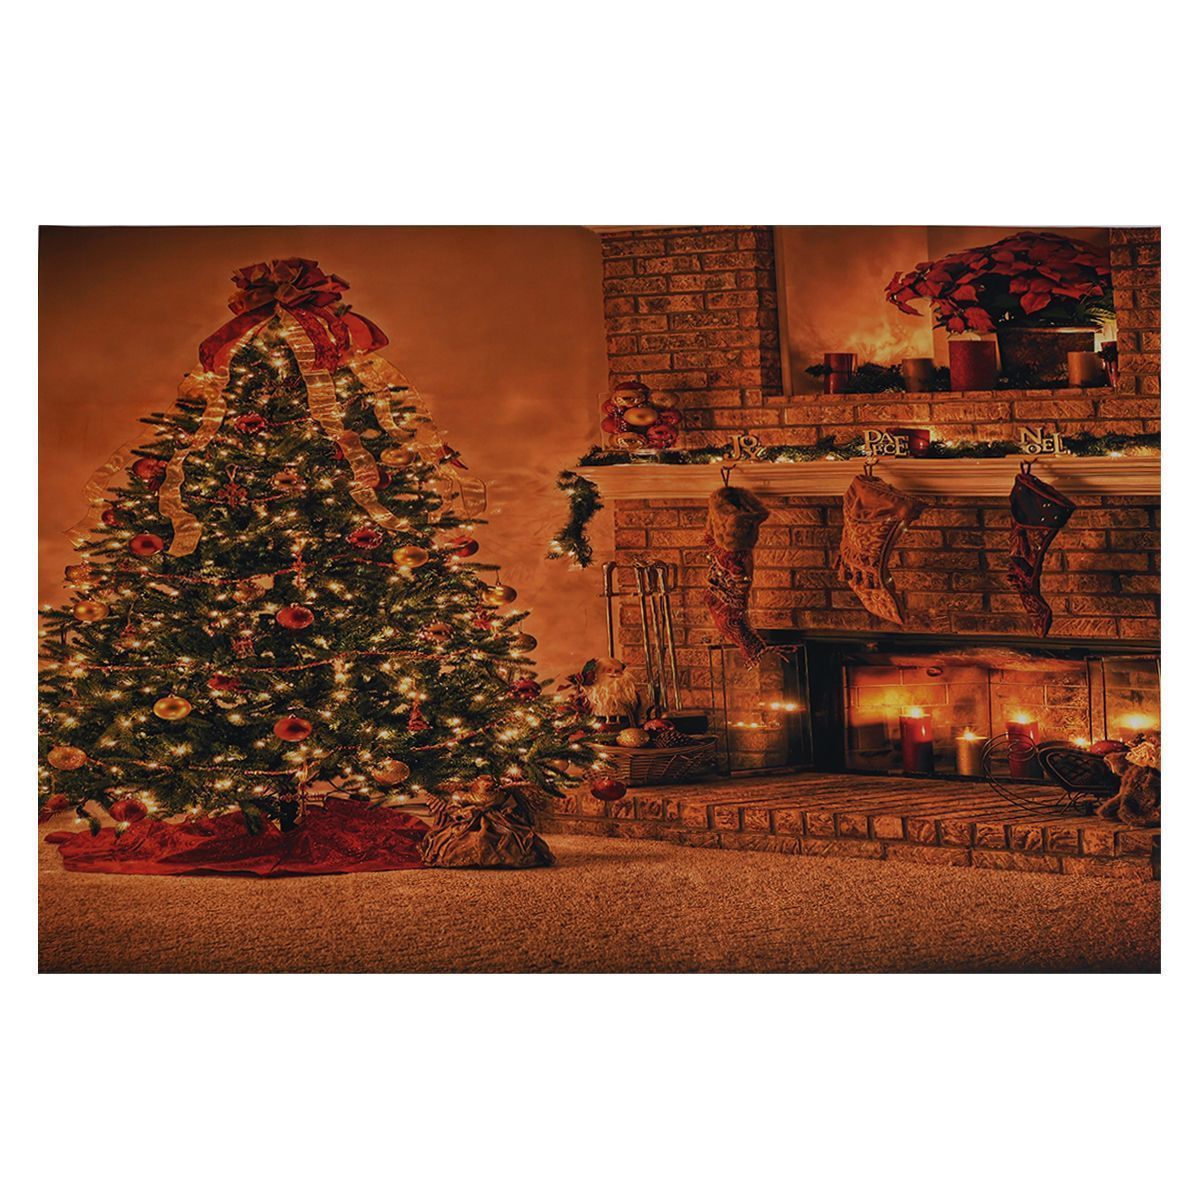 1x15m-15x22m-18x25m-Christmas-Tree-Fireplace-Socks-Photography-Backdrop-Cloth-for-Photo-Studio-Backd-1764545